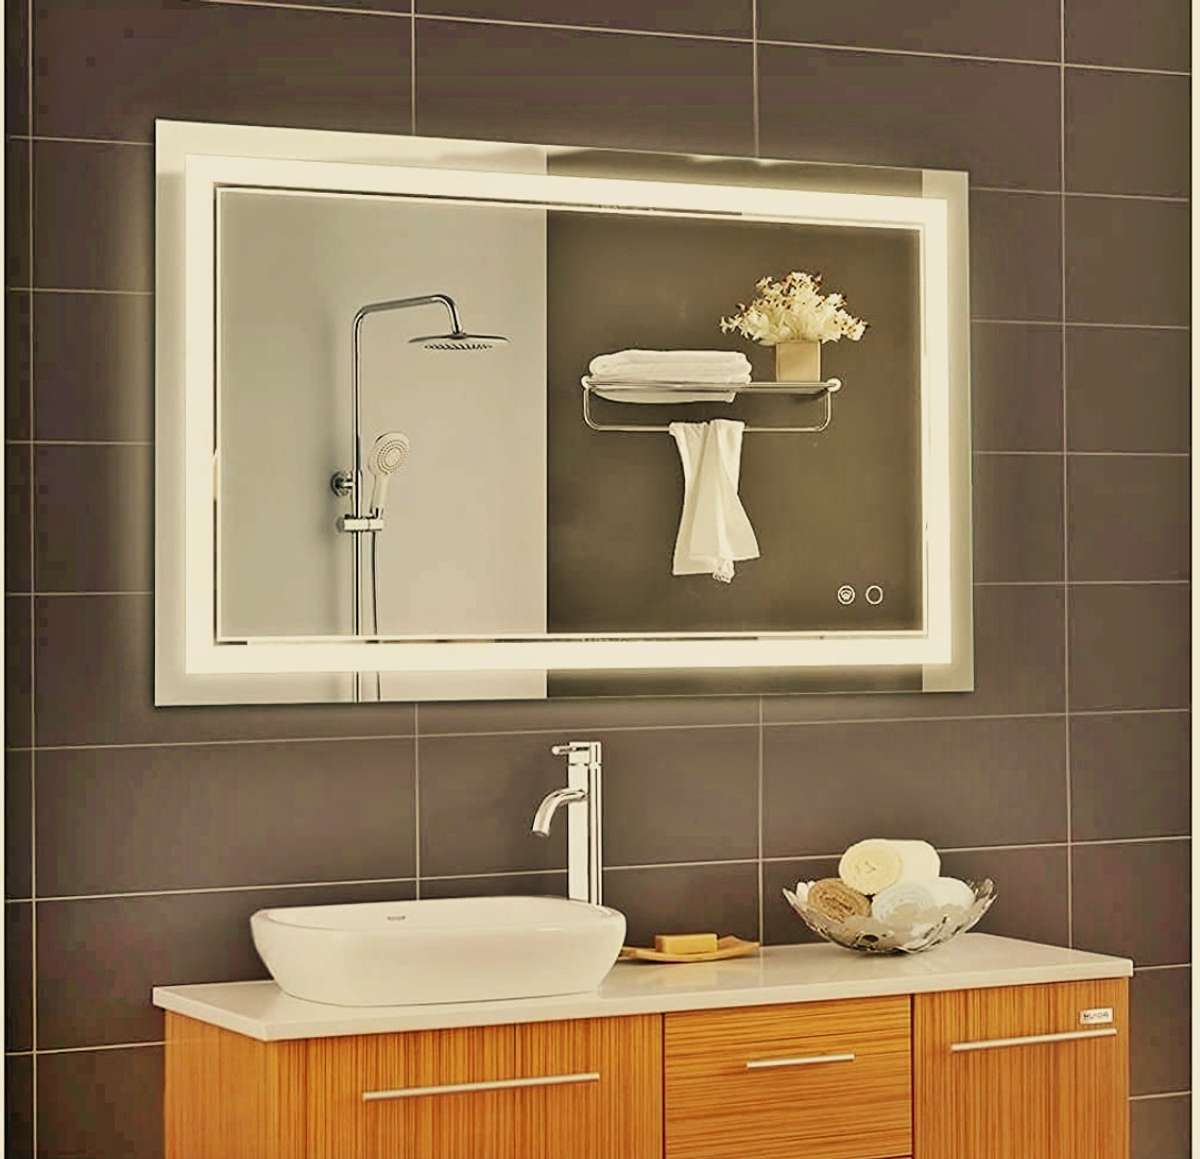 Led Sensor Mirror

#mirrorunit #GlassMirror #customized_mirror #mirrordesign #mirrorwardrobe #LED_Mirror #LED_Sensor_Mirror #blutooth_mirror #sensormirror #ledmirror #touchmirror #touchlightmirror #touchsensormirror #BathroomIdeas #BathroomRenovation #BathroomDesigns #bathroom #Washroomideas #Washroom #washroomdesign #washroomwork #mirror_wall